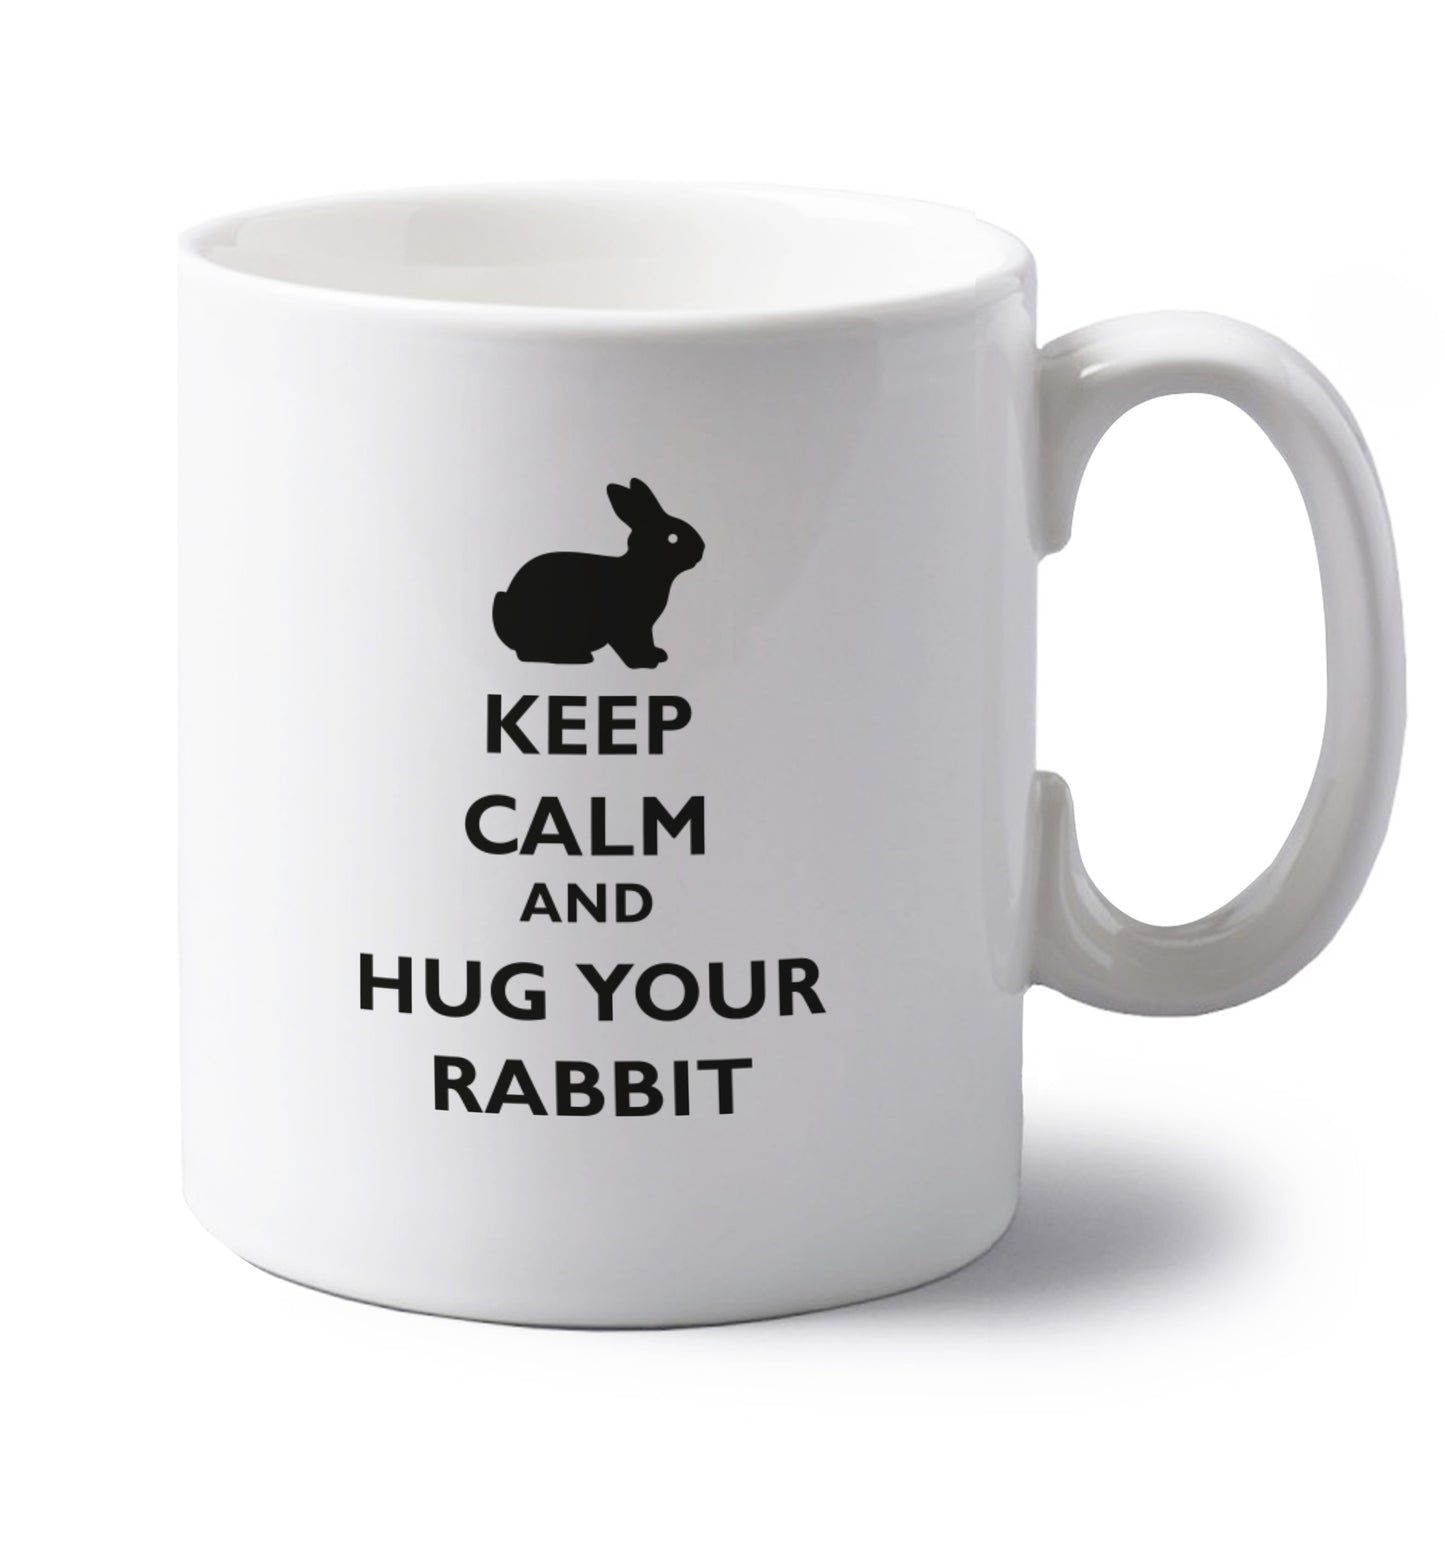 Keep calm and hug your rabbit left handed white ceramic mug 